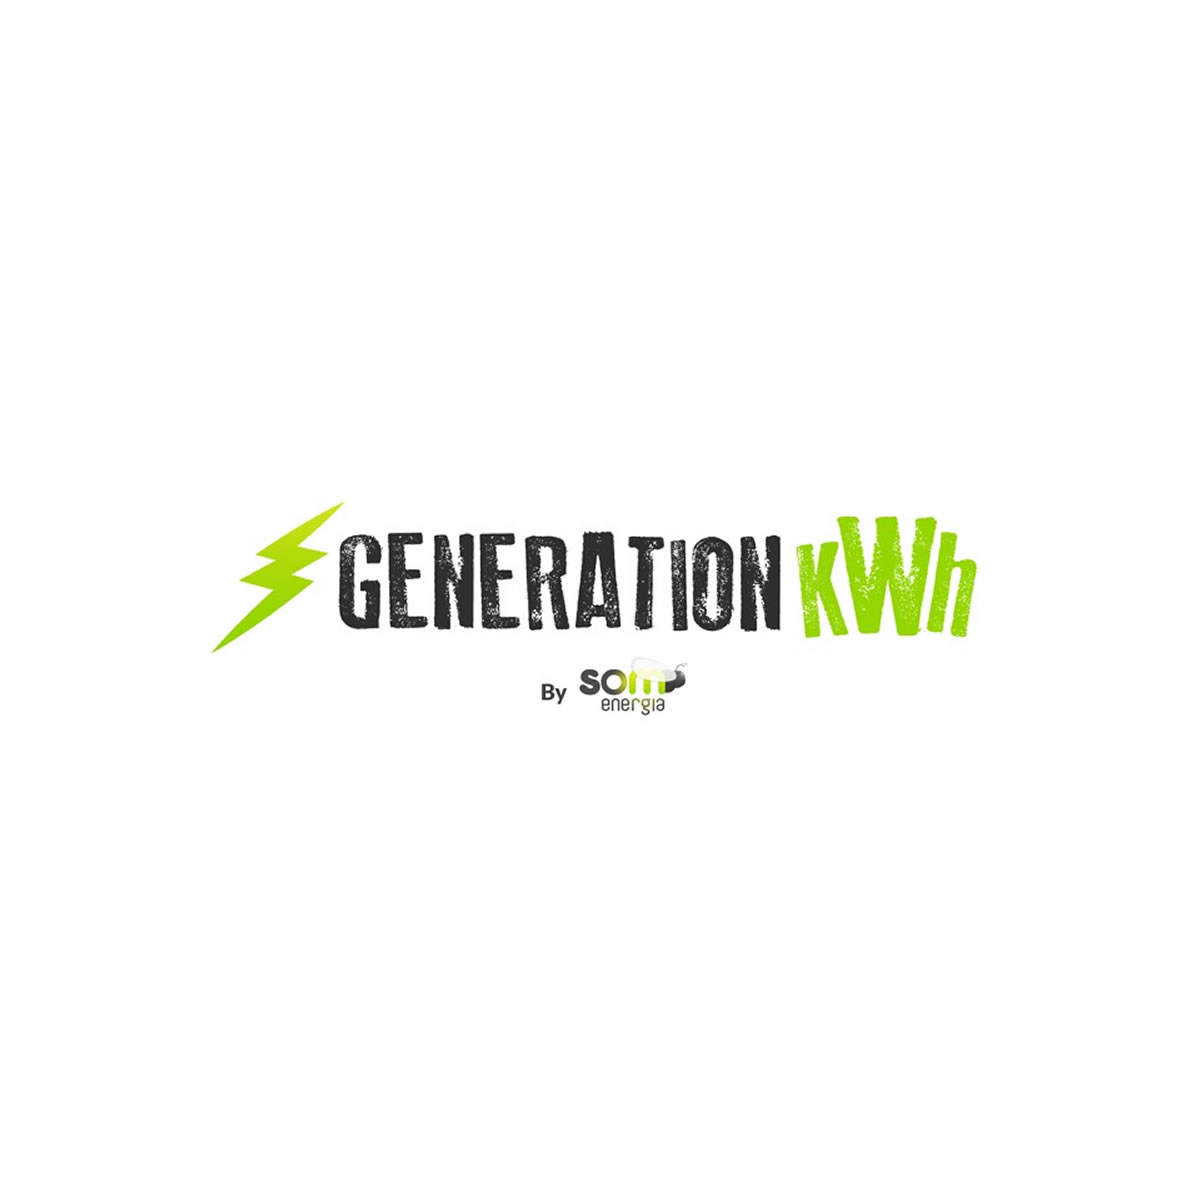 (c) Generationkwh.org